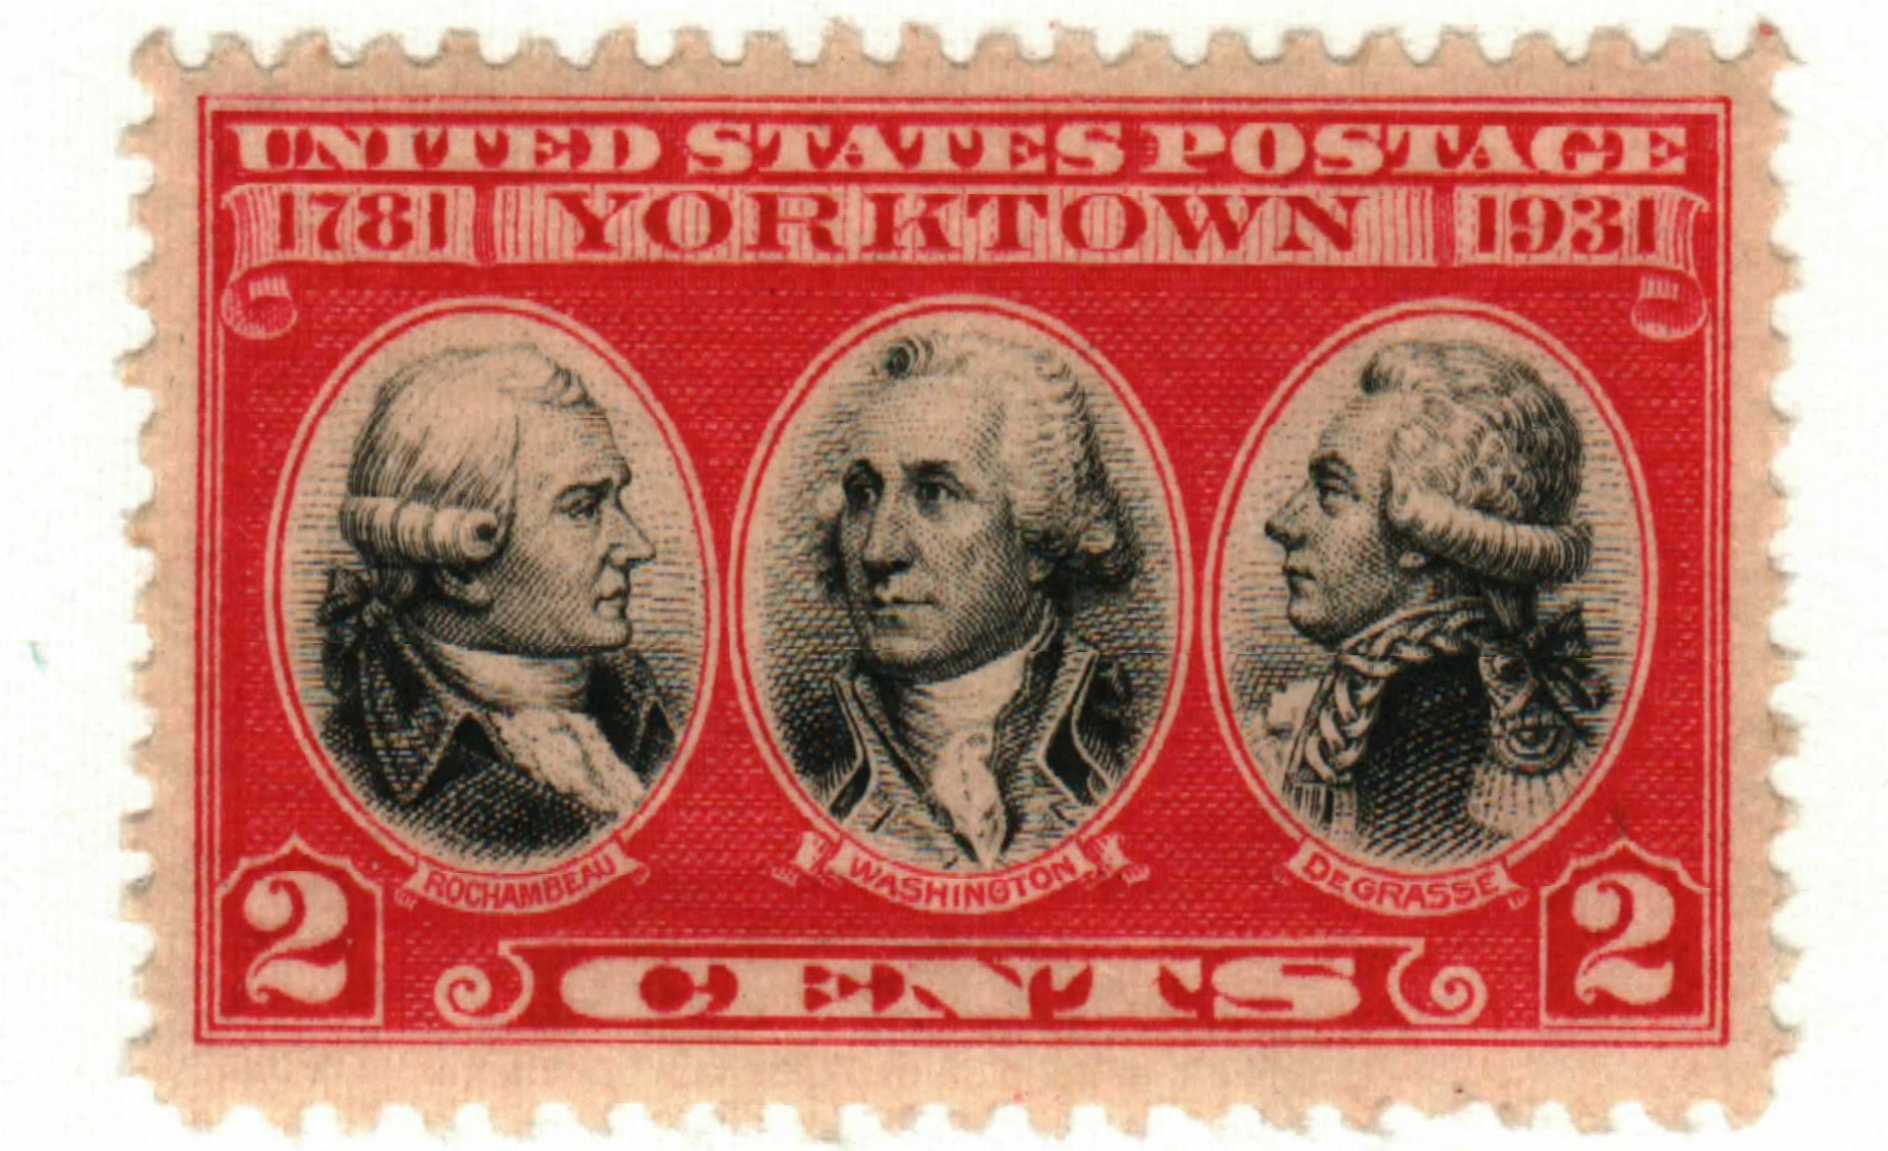 U.S. #703 honors the commanding generals at Yorktown: Washington, Rochambeau, and Degrasse.